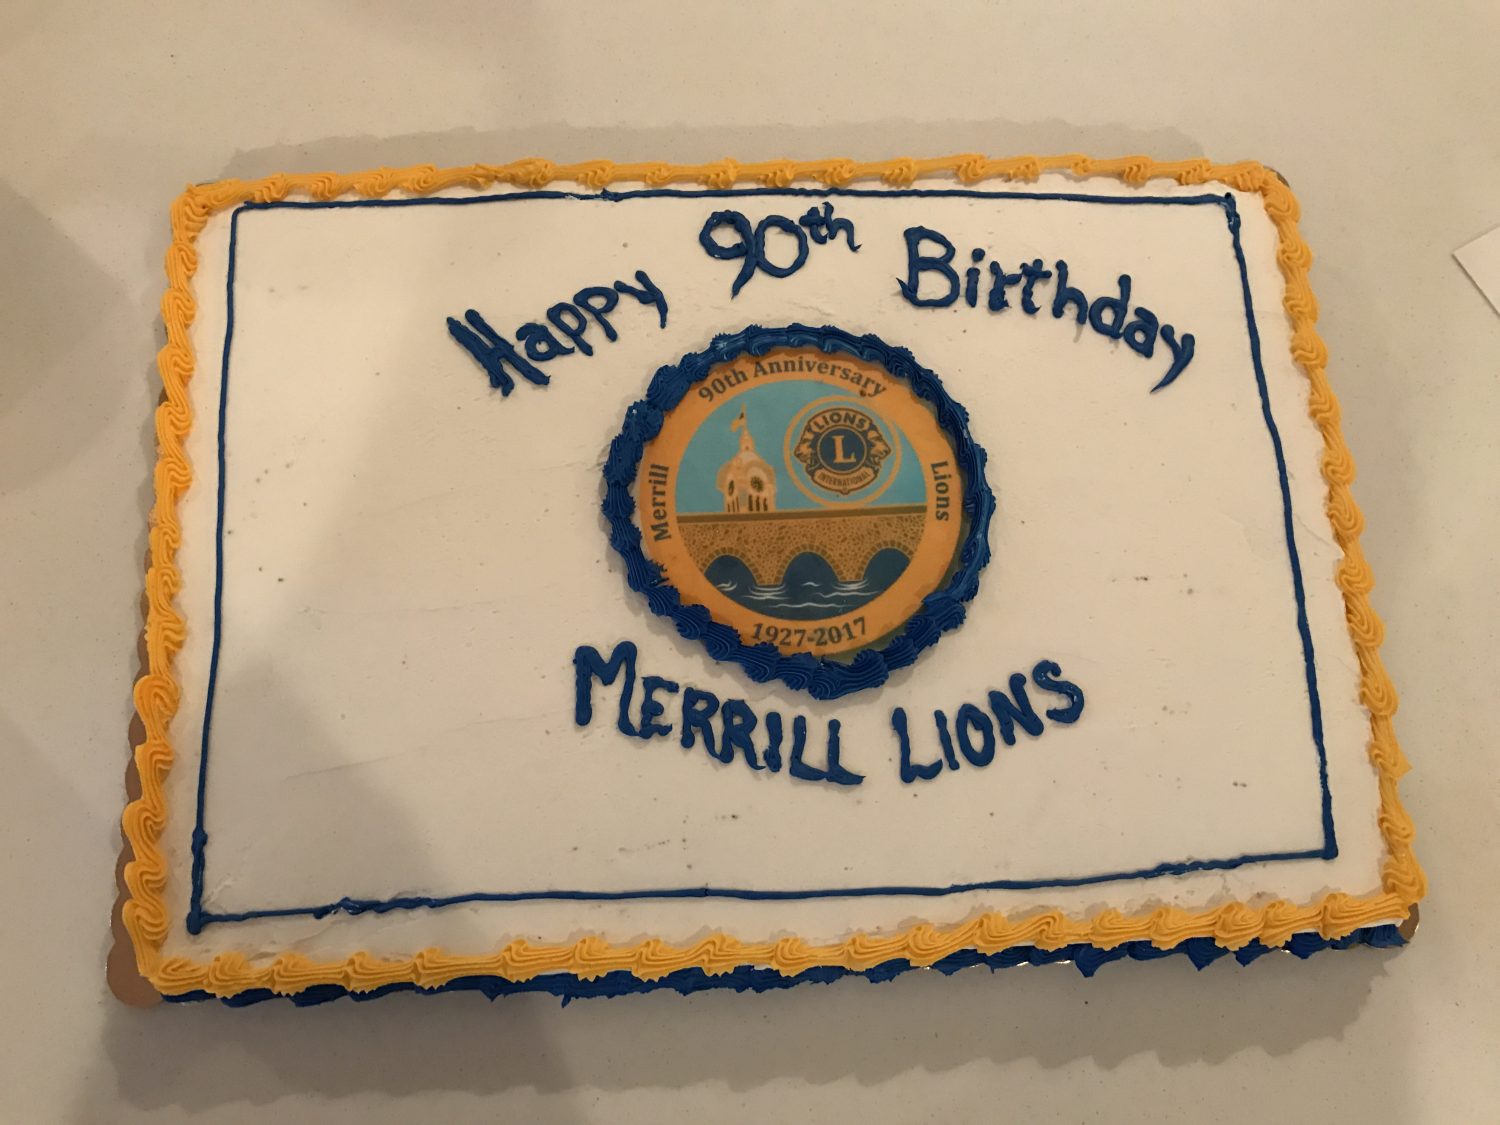 Merrill Lions celebrate 90 years